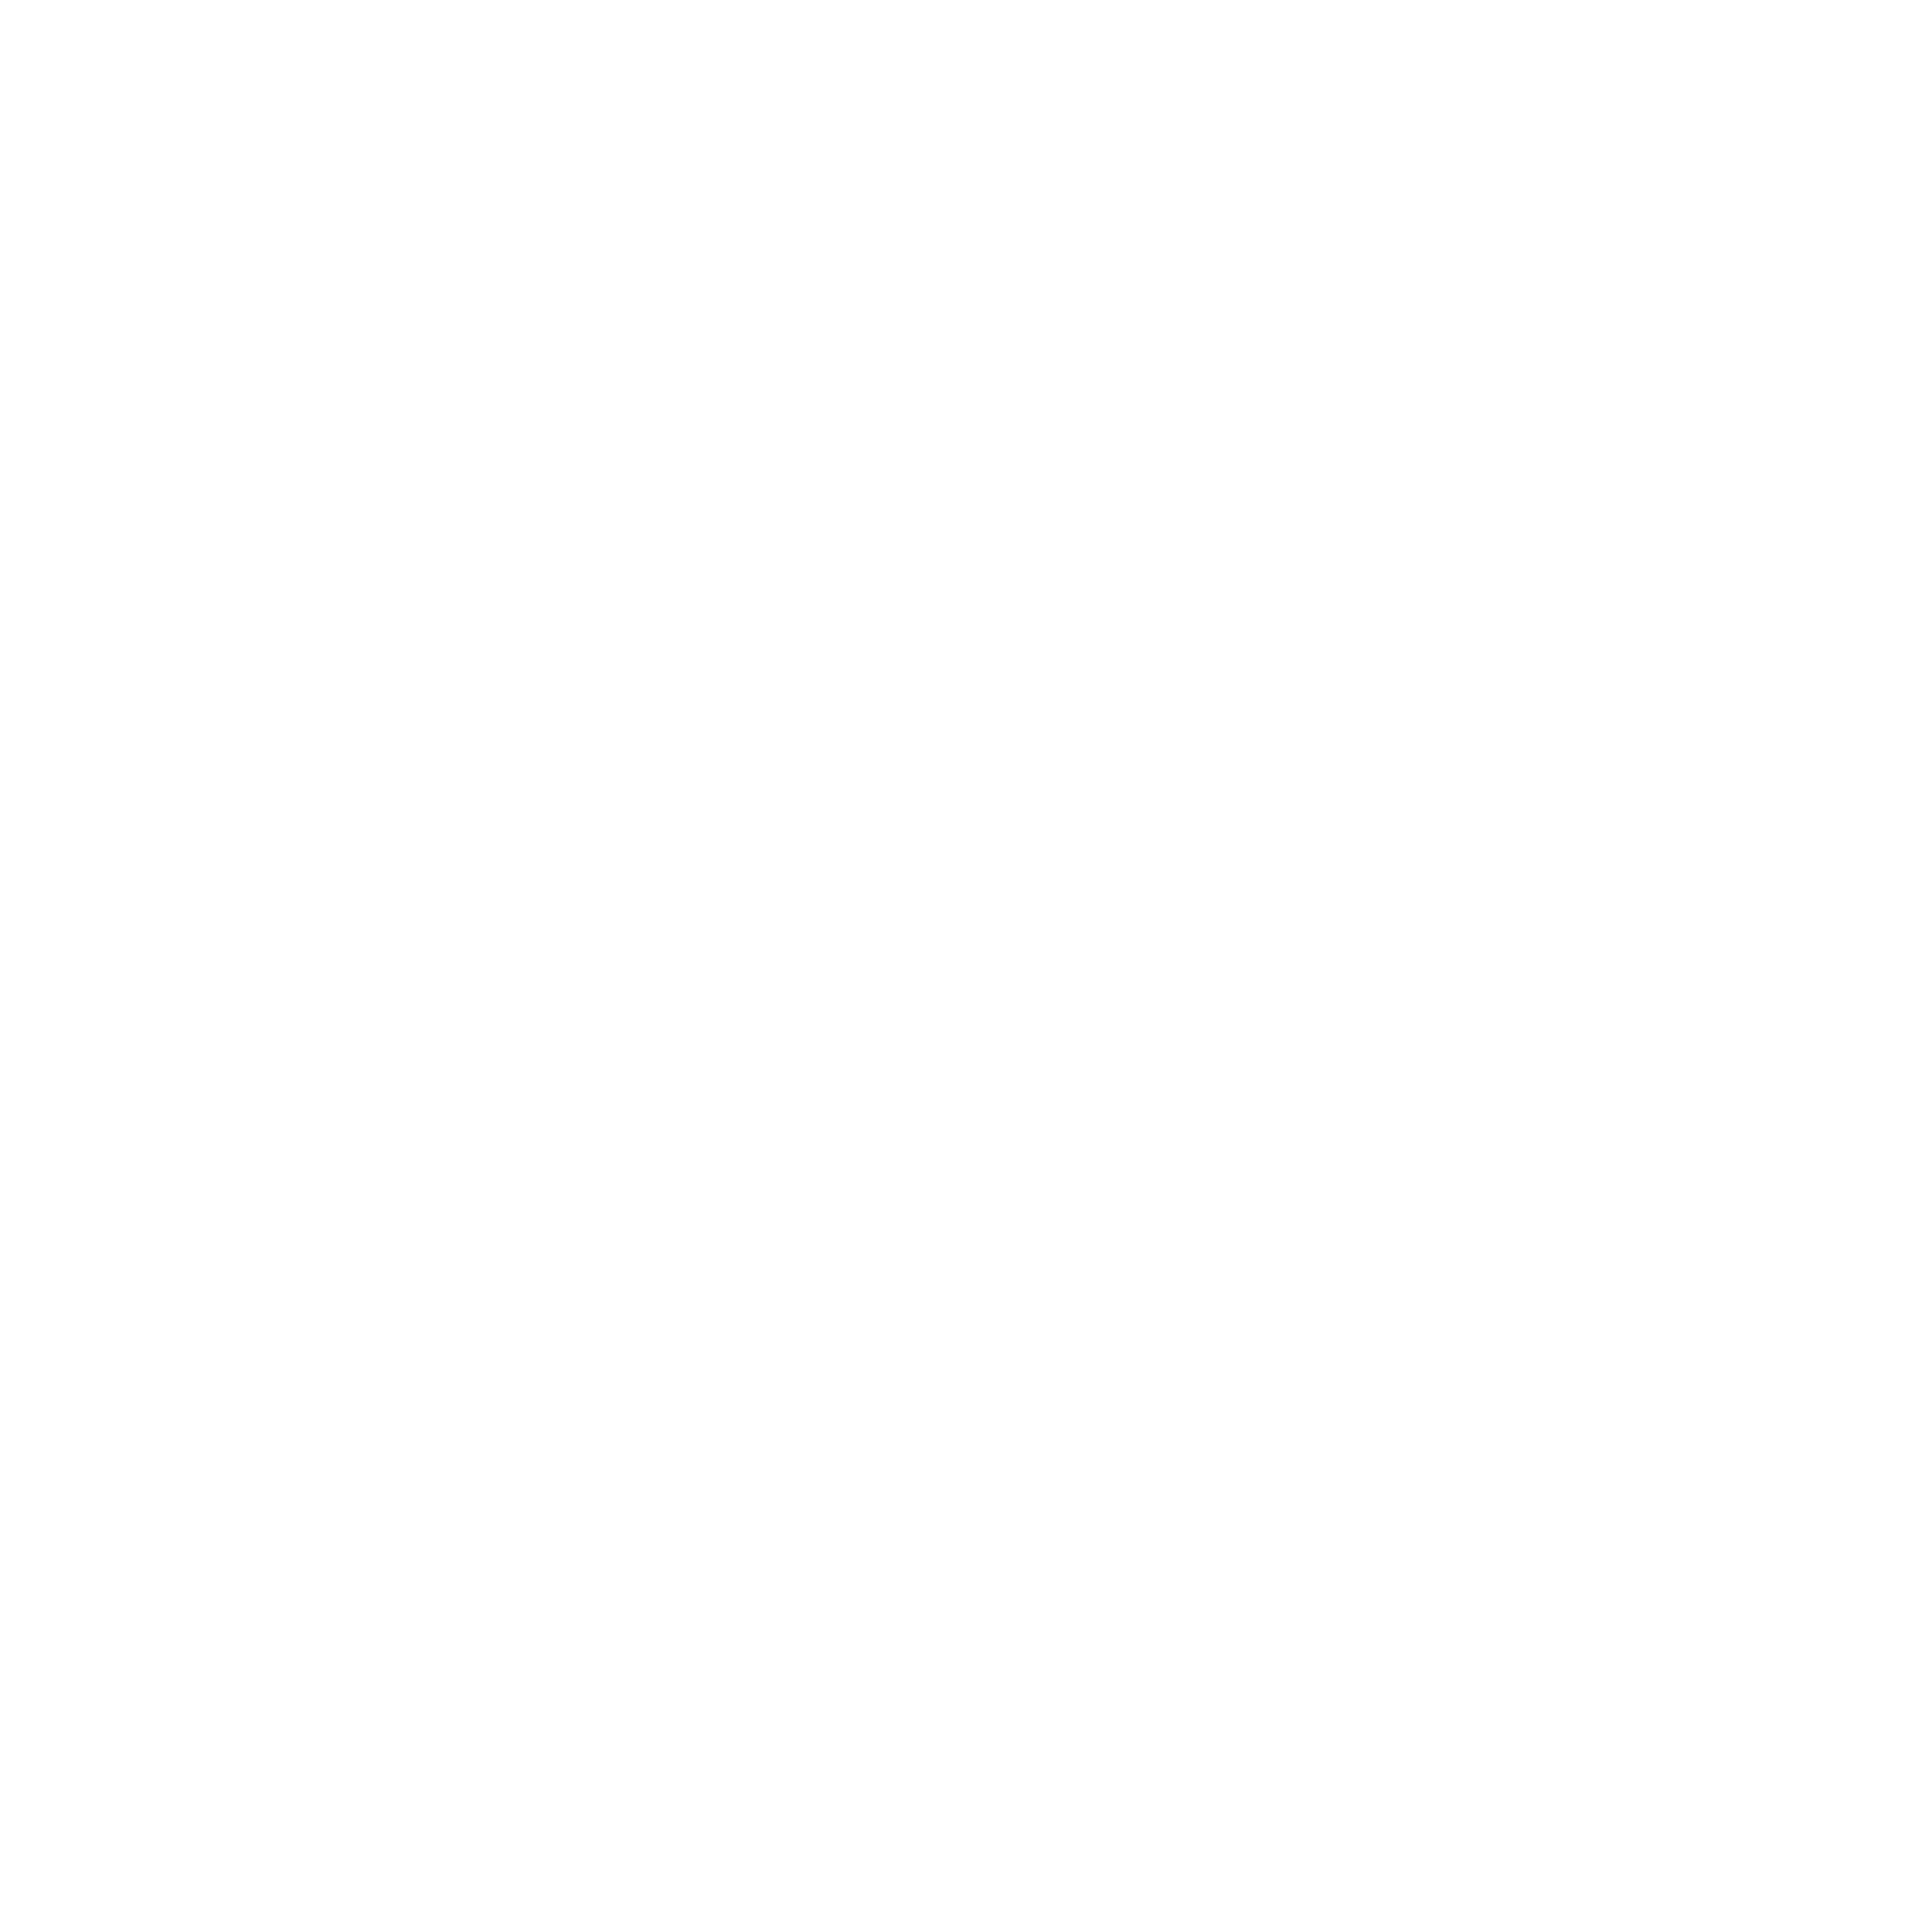 Hydro logotype in white